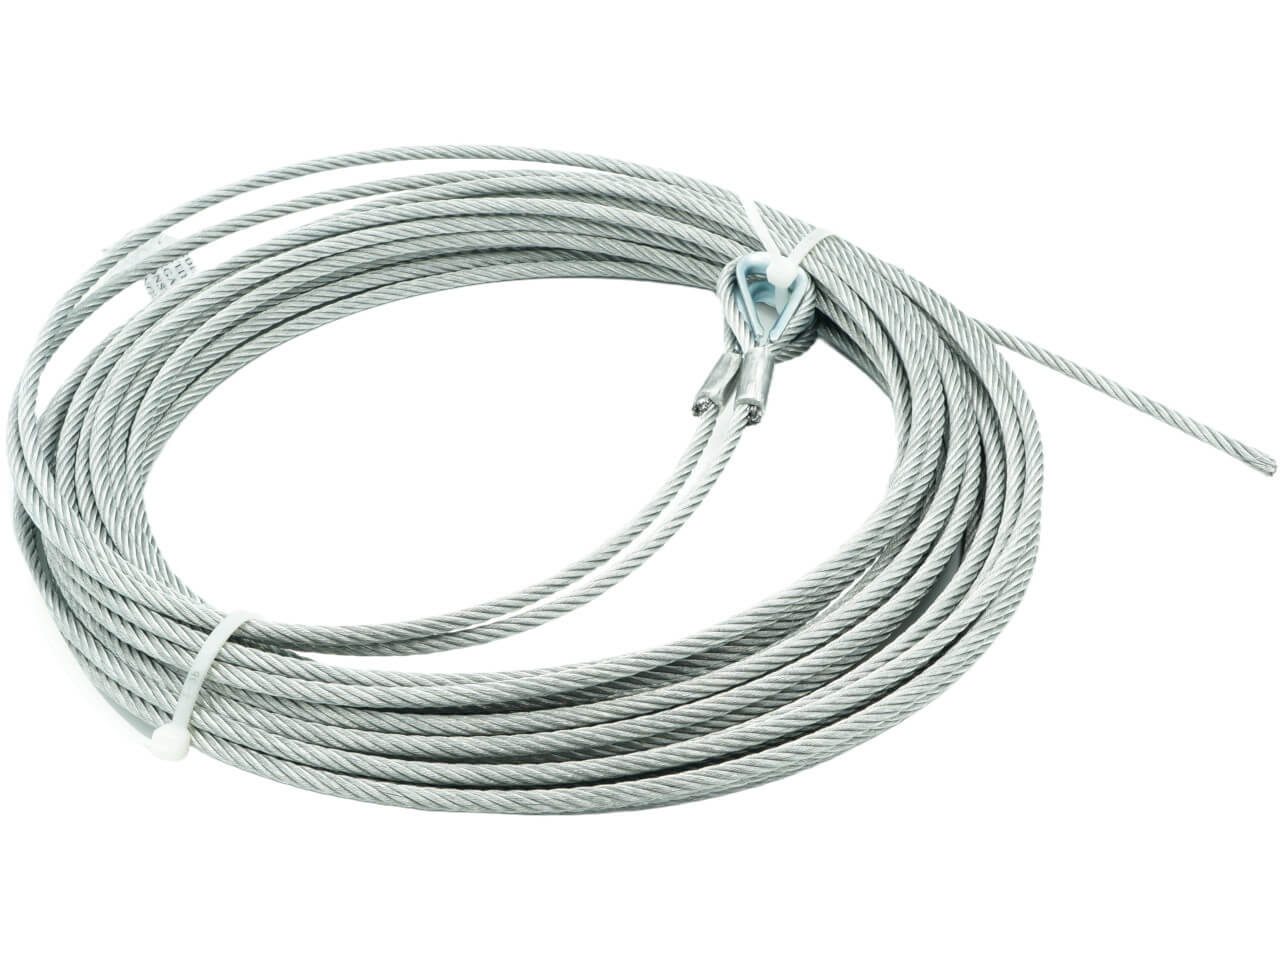 Cable Diameter 4,0mm Length 4m